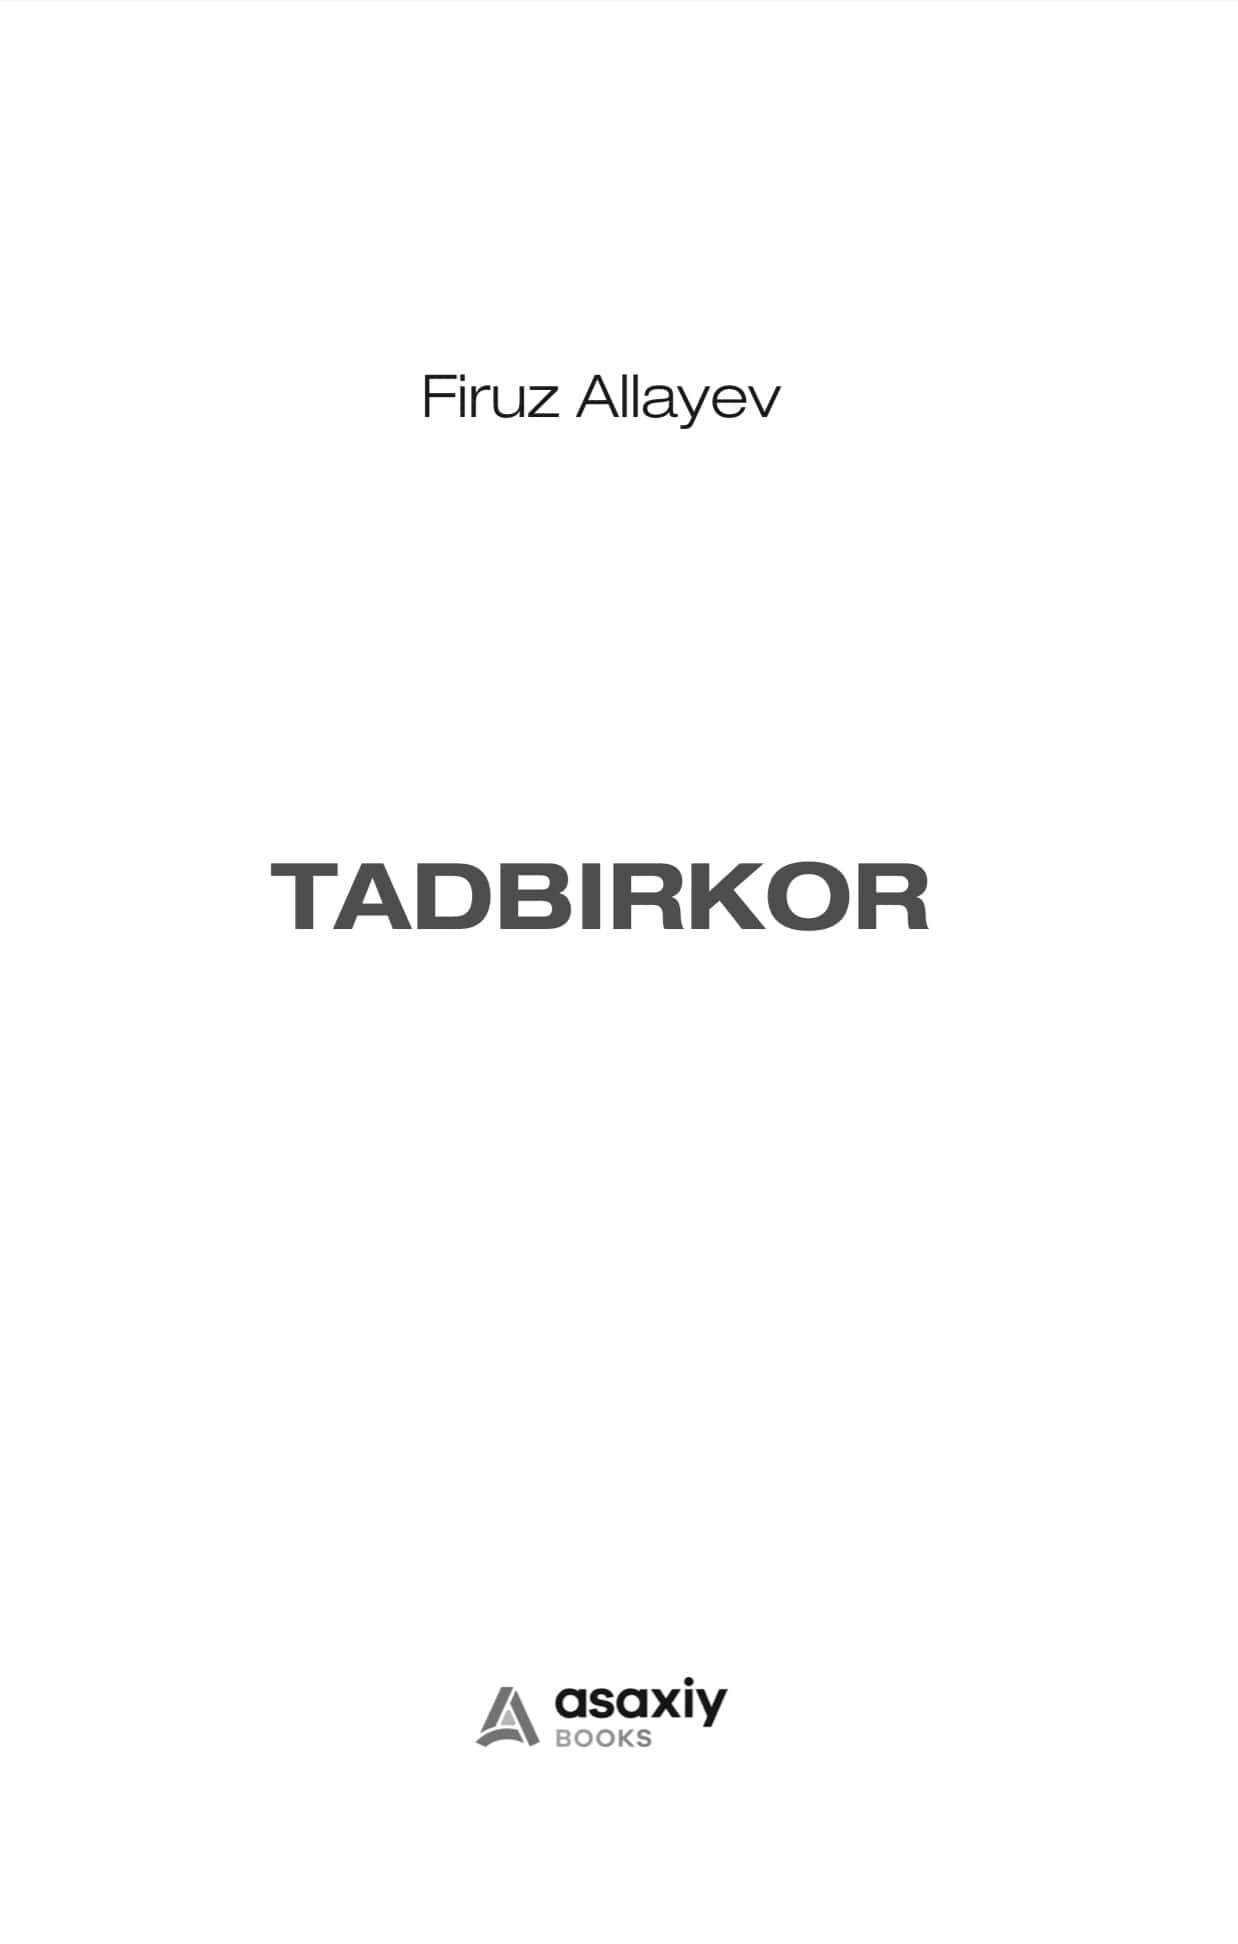 Фируз Аллаев: Тадбиркор в Узбекистане